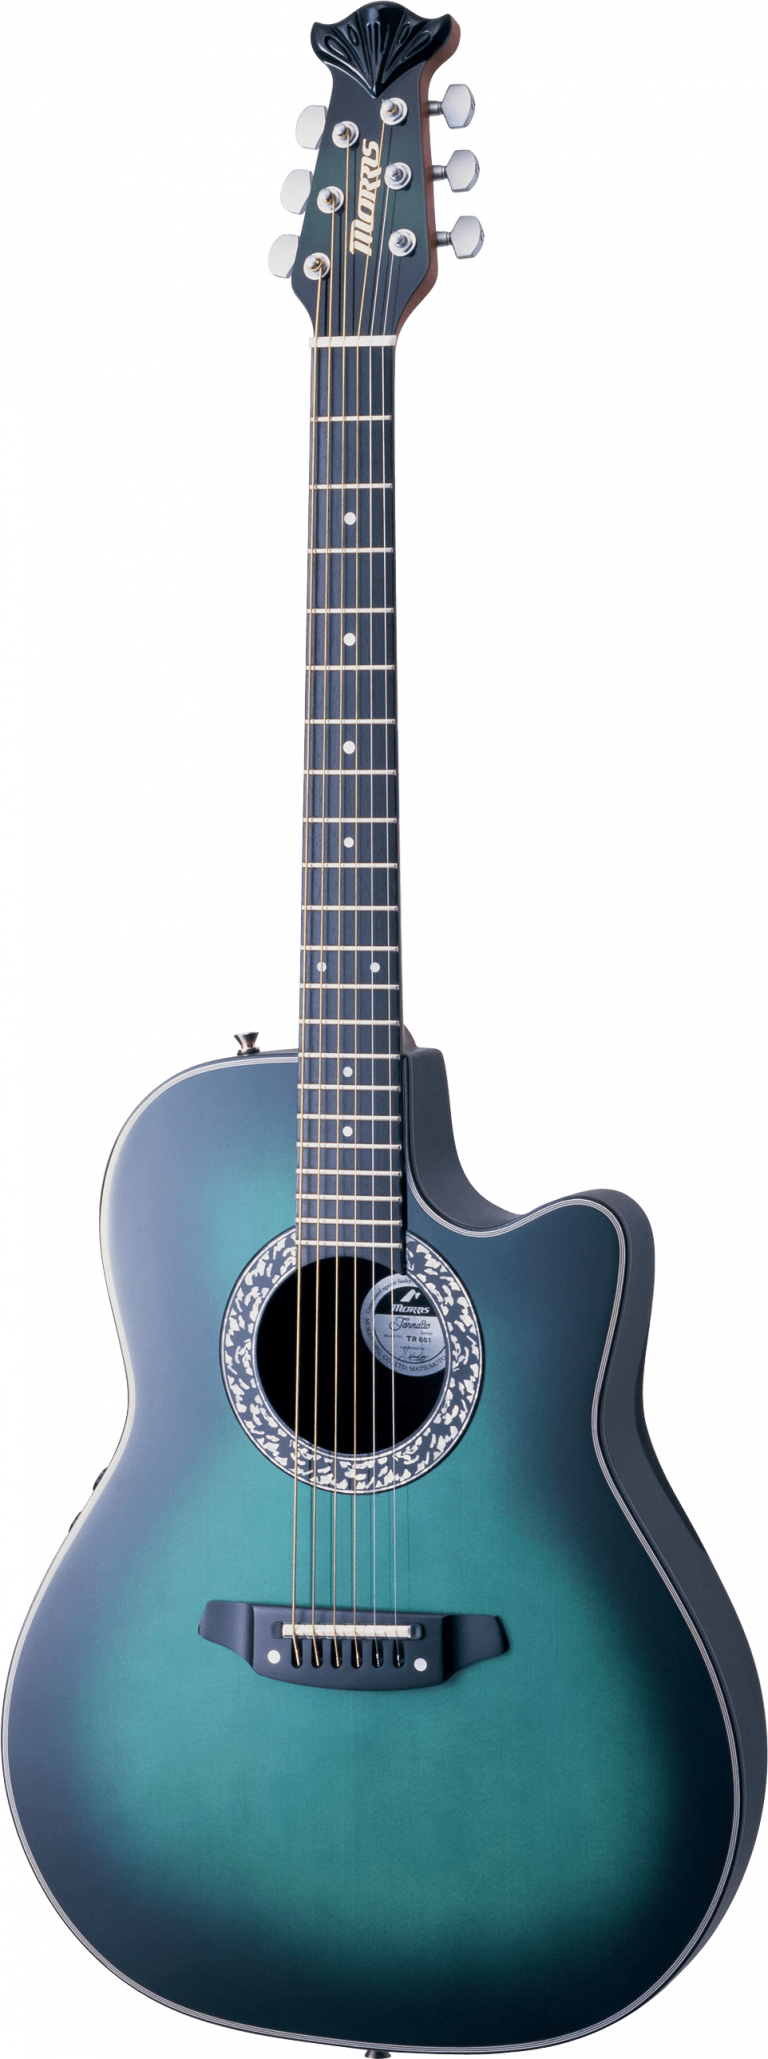 Acoustic Blue Guitar PNG Clipart Background